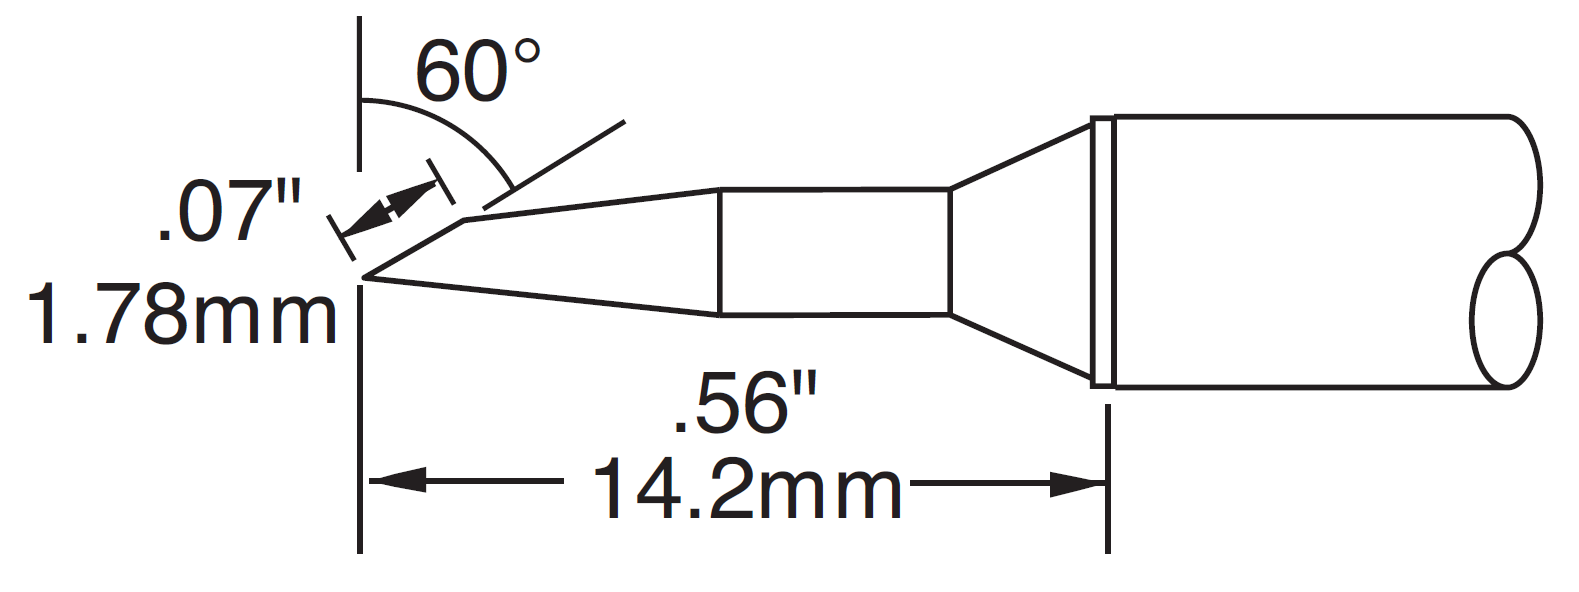 Картридж-наконечник для СV/MX, скос 60° удлиненный, 1.78х14.2мм (замена STTC-847)